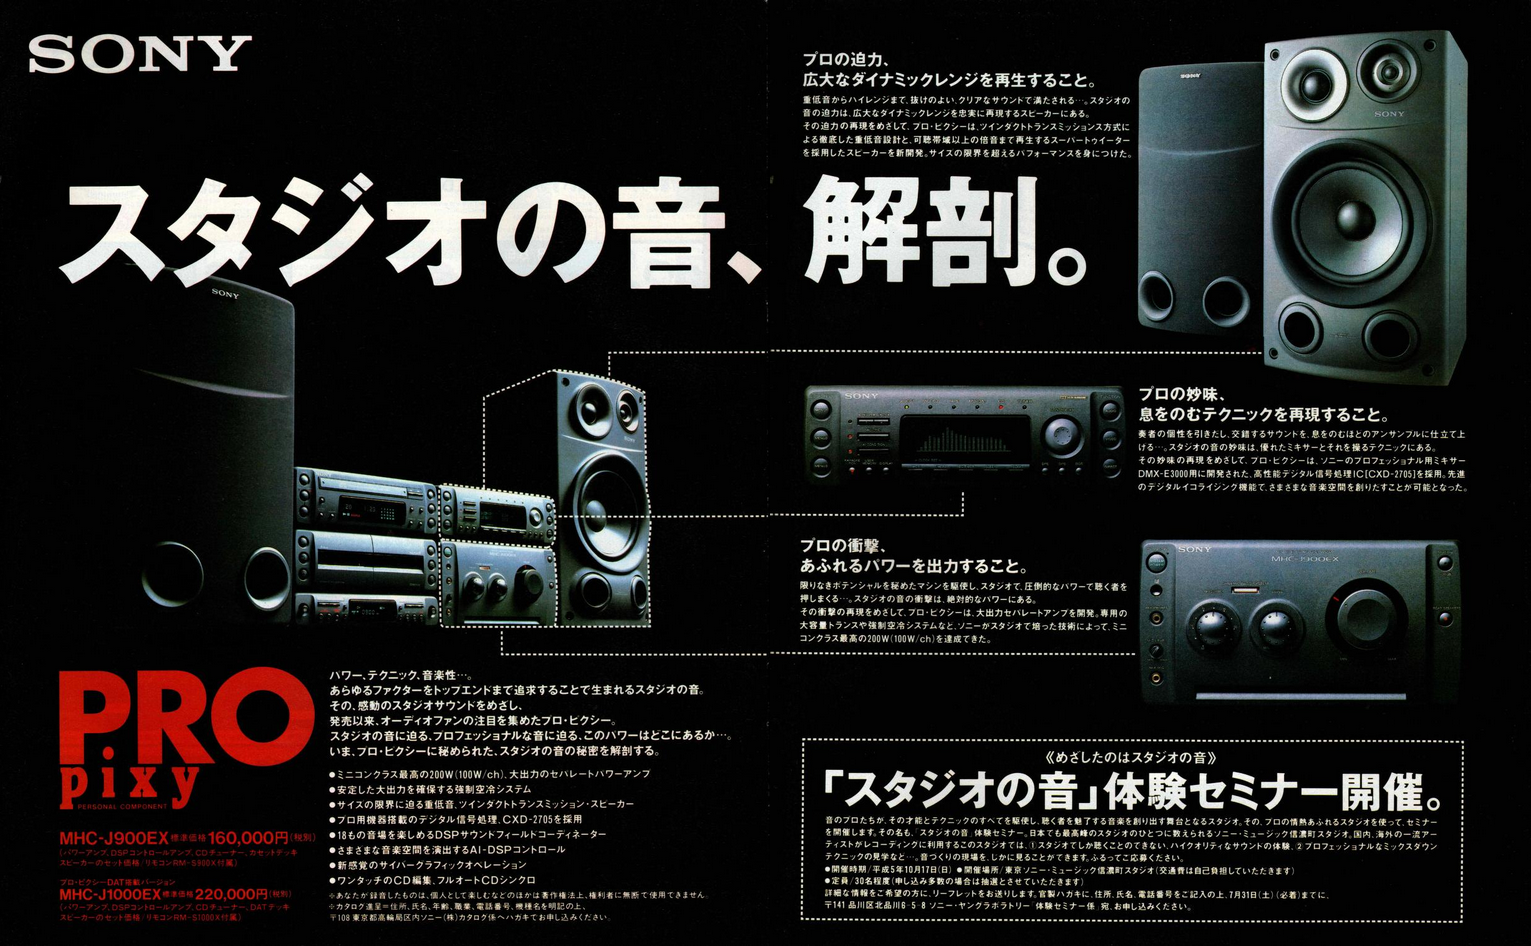 Sony Pro Pixy MHC-J1000EX 1993.png